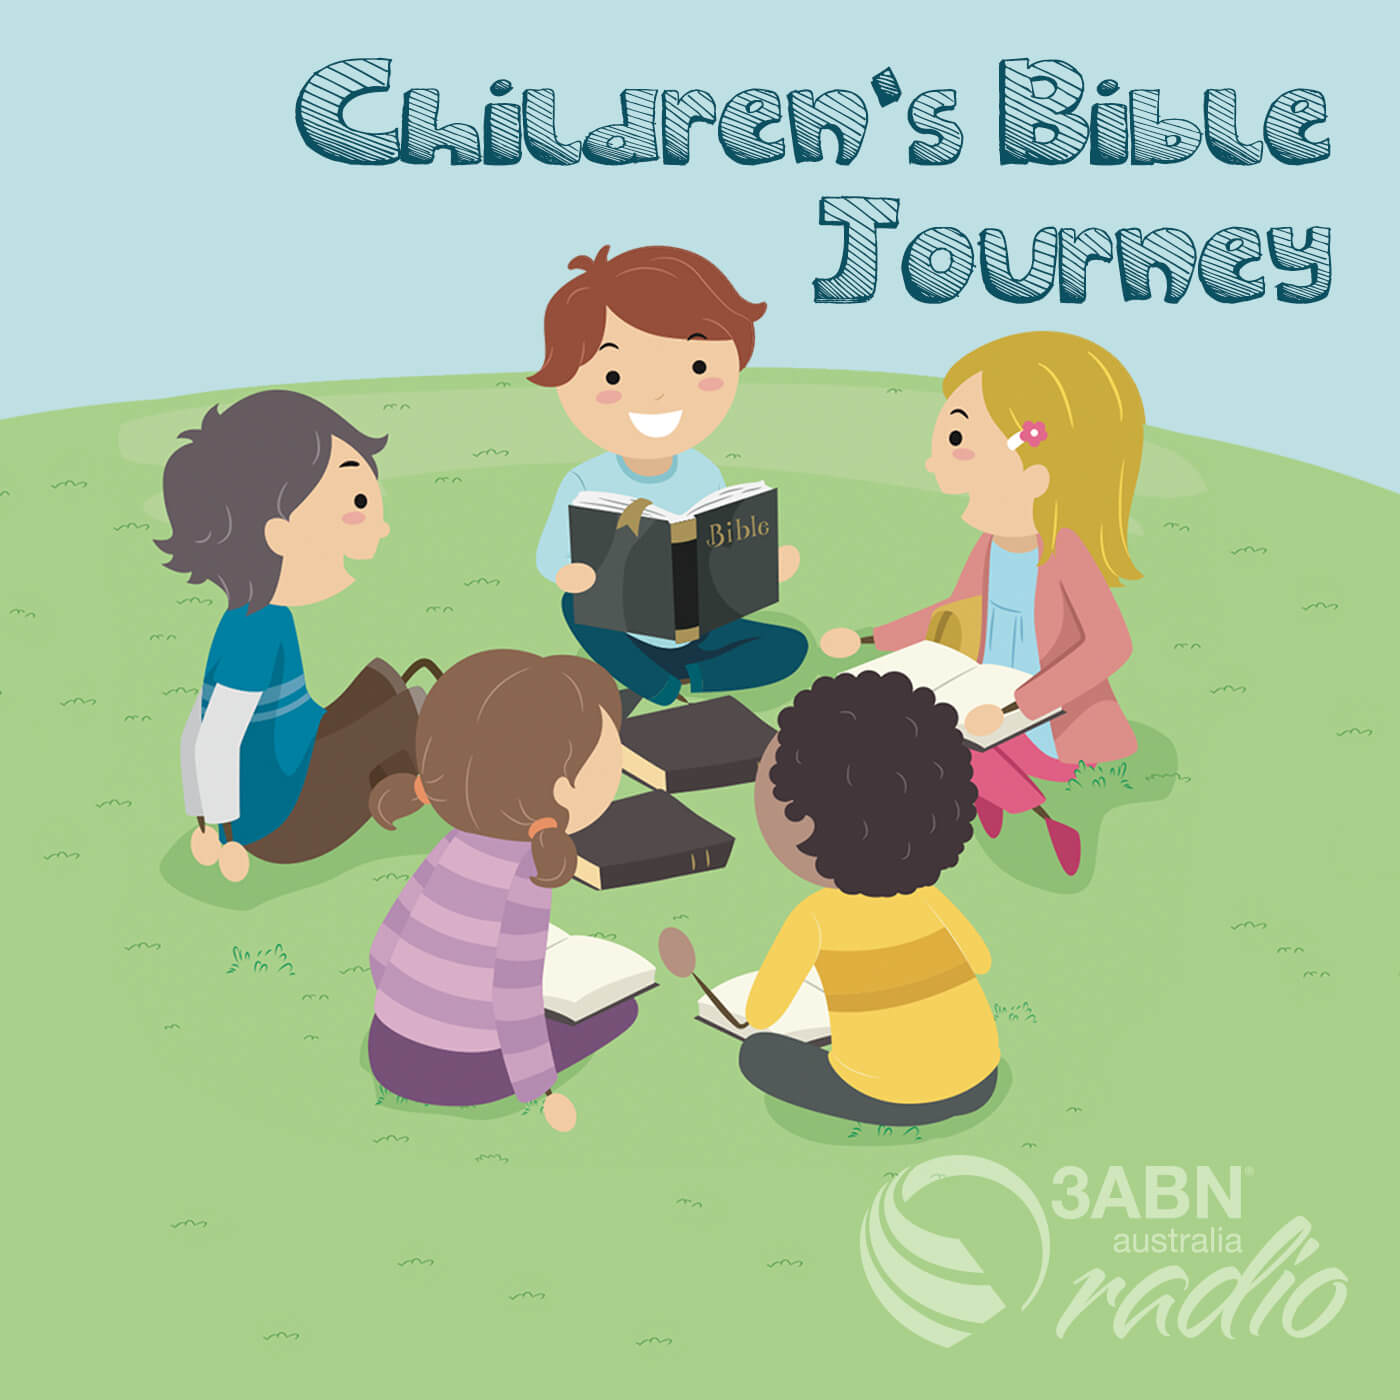 Children's Bible Journey - 2166